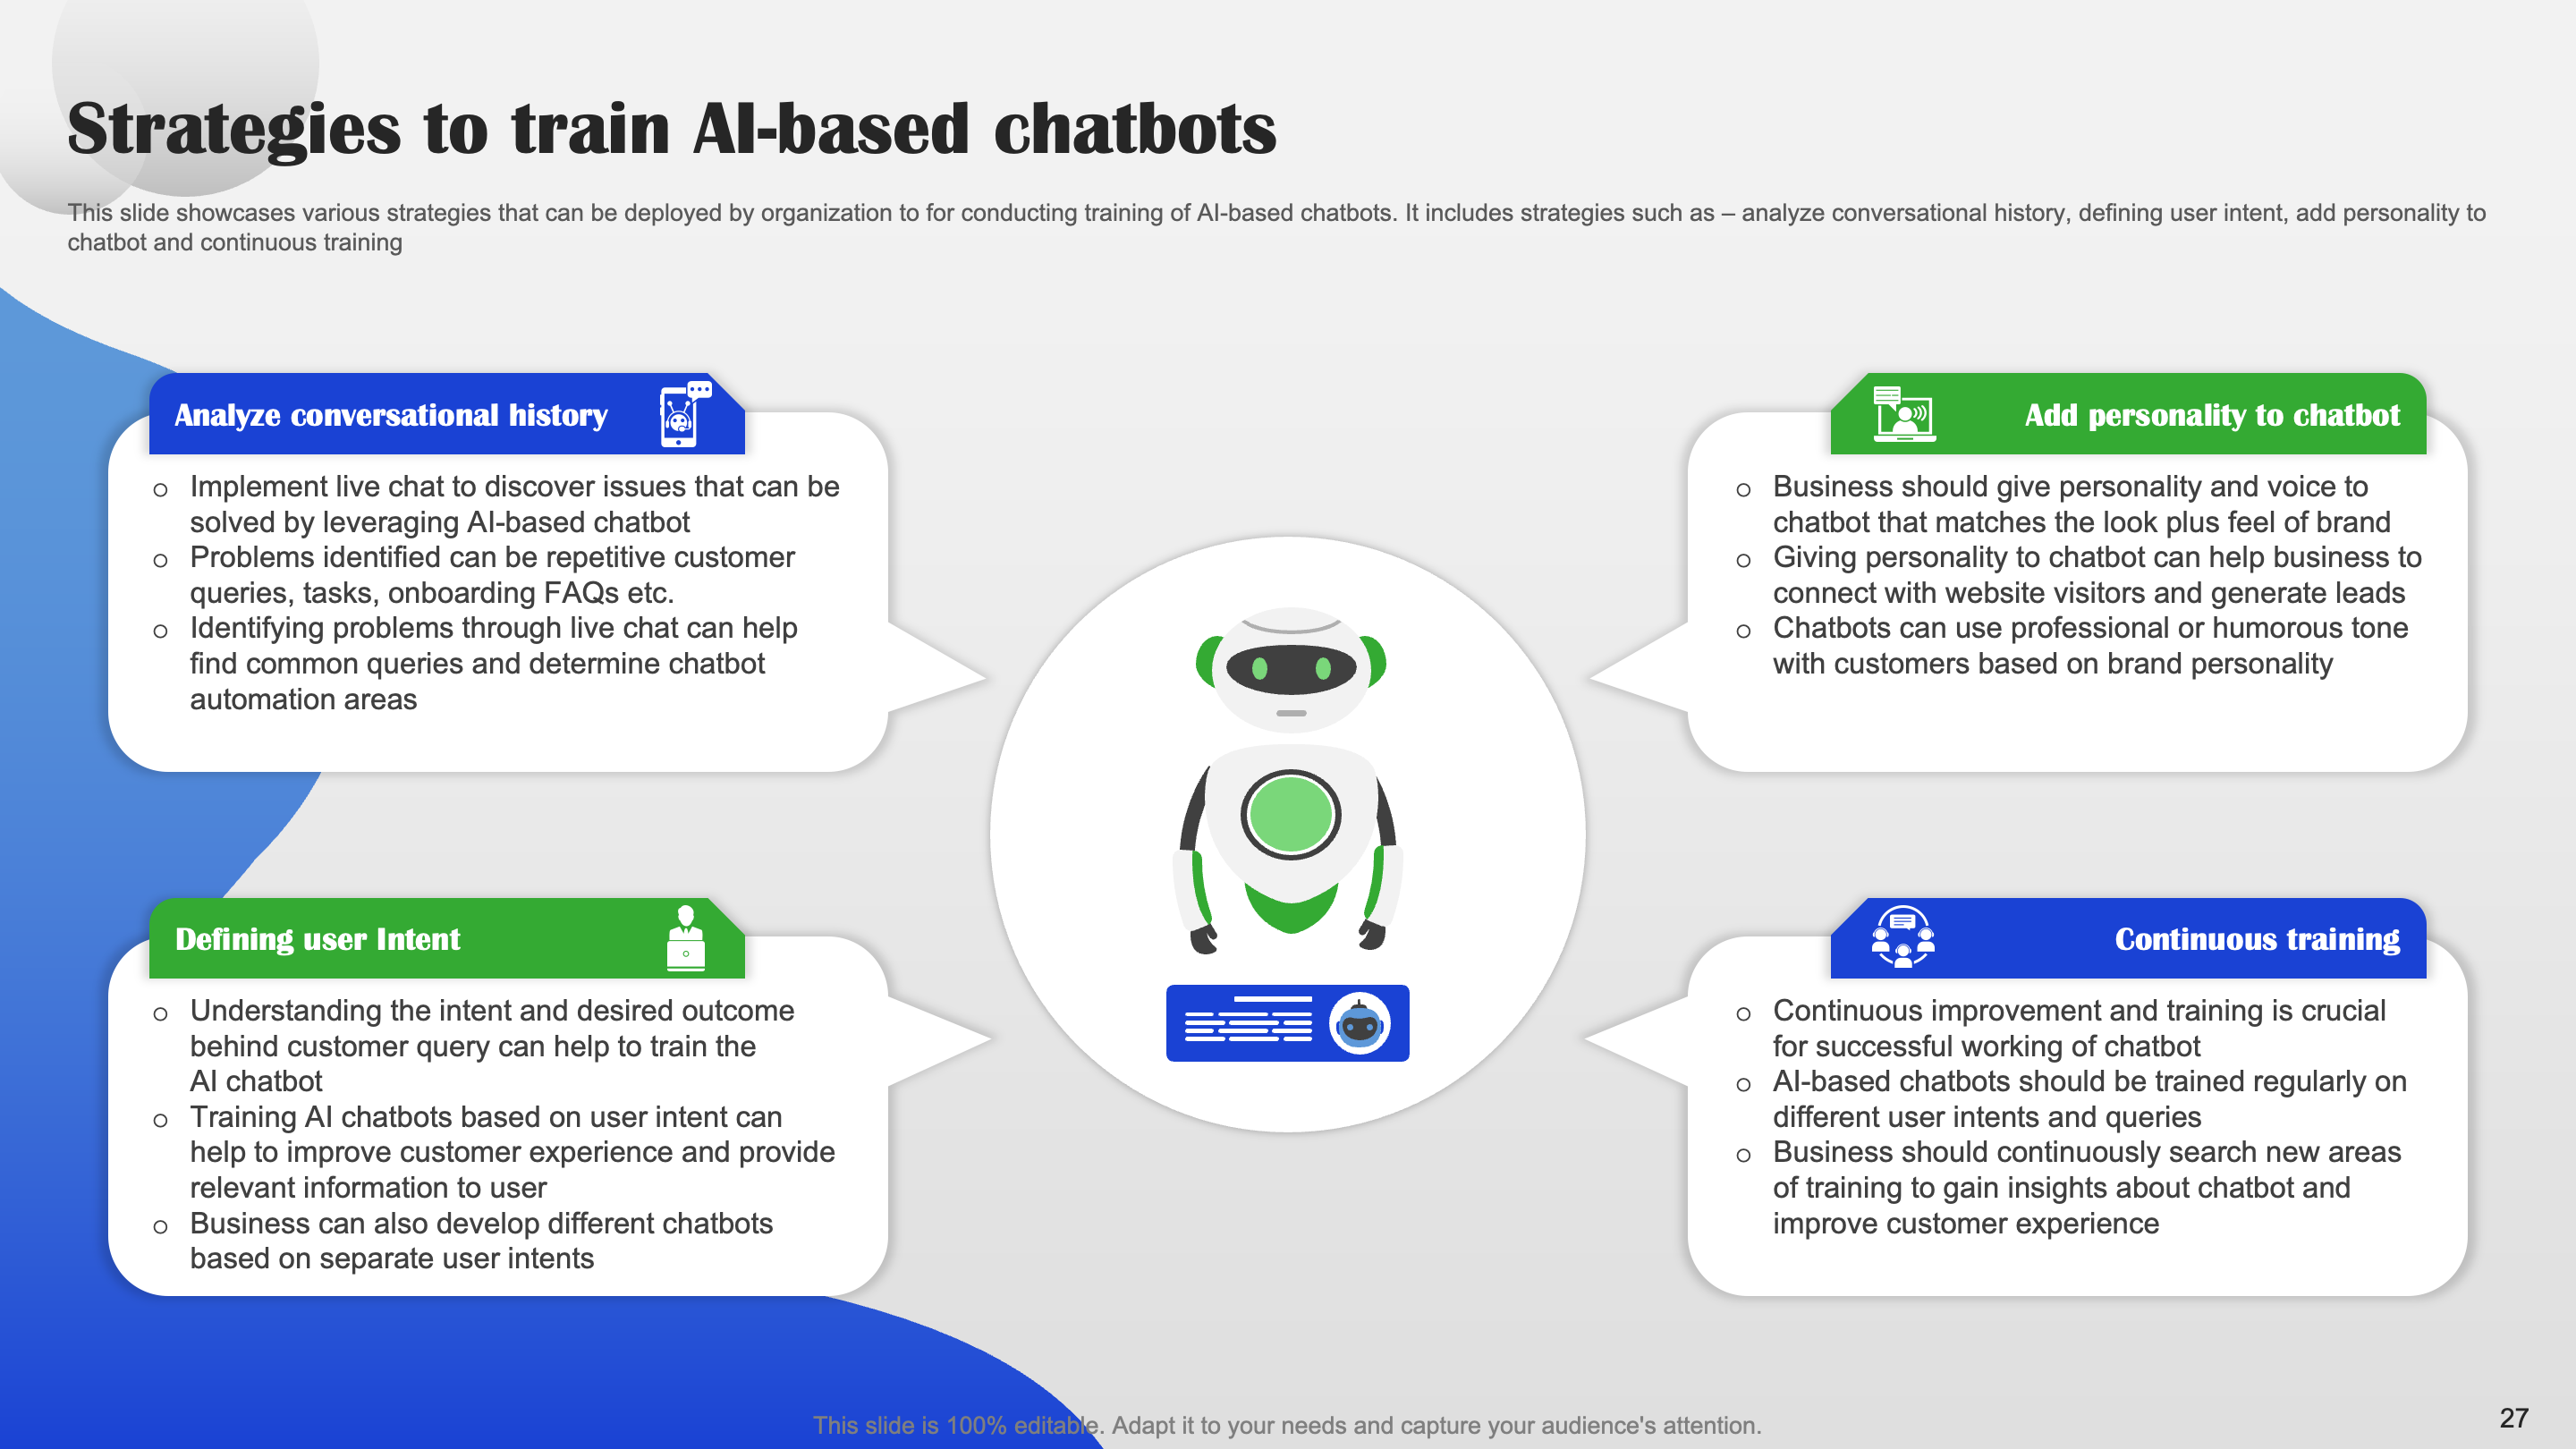 Strategies to Train AI-Based Chatbots